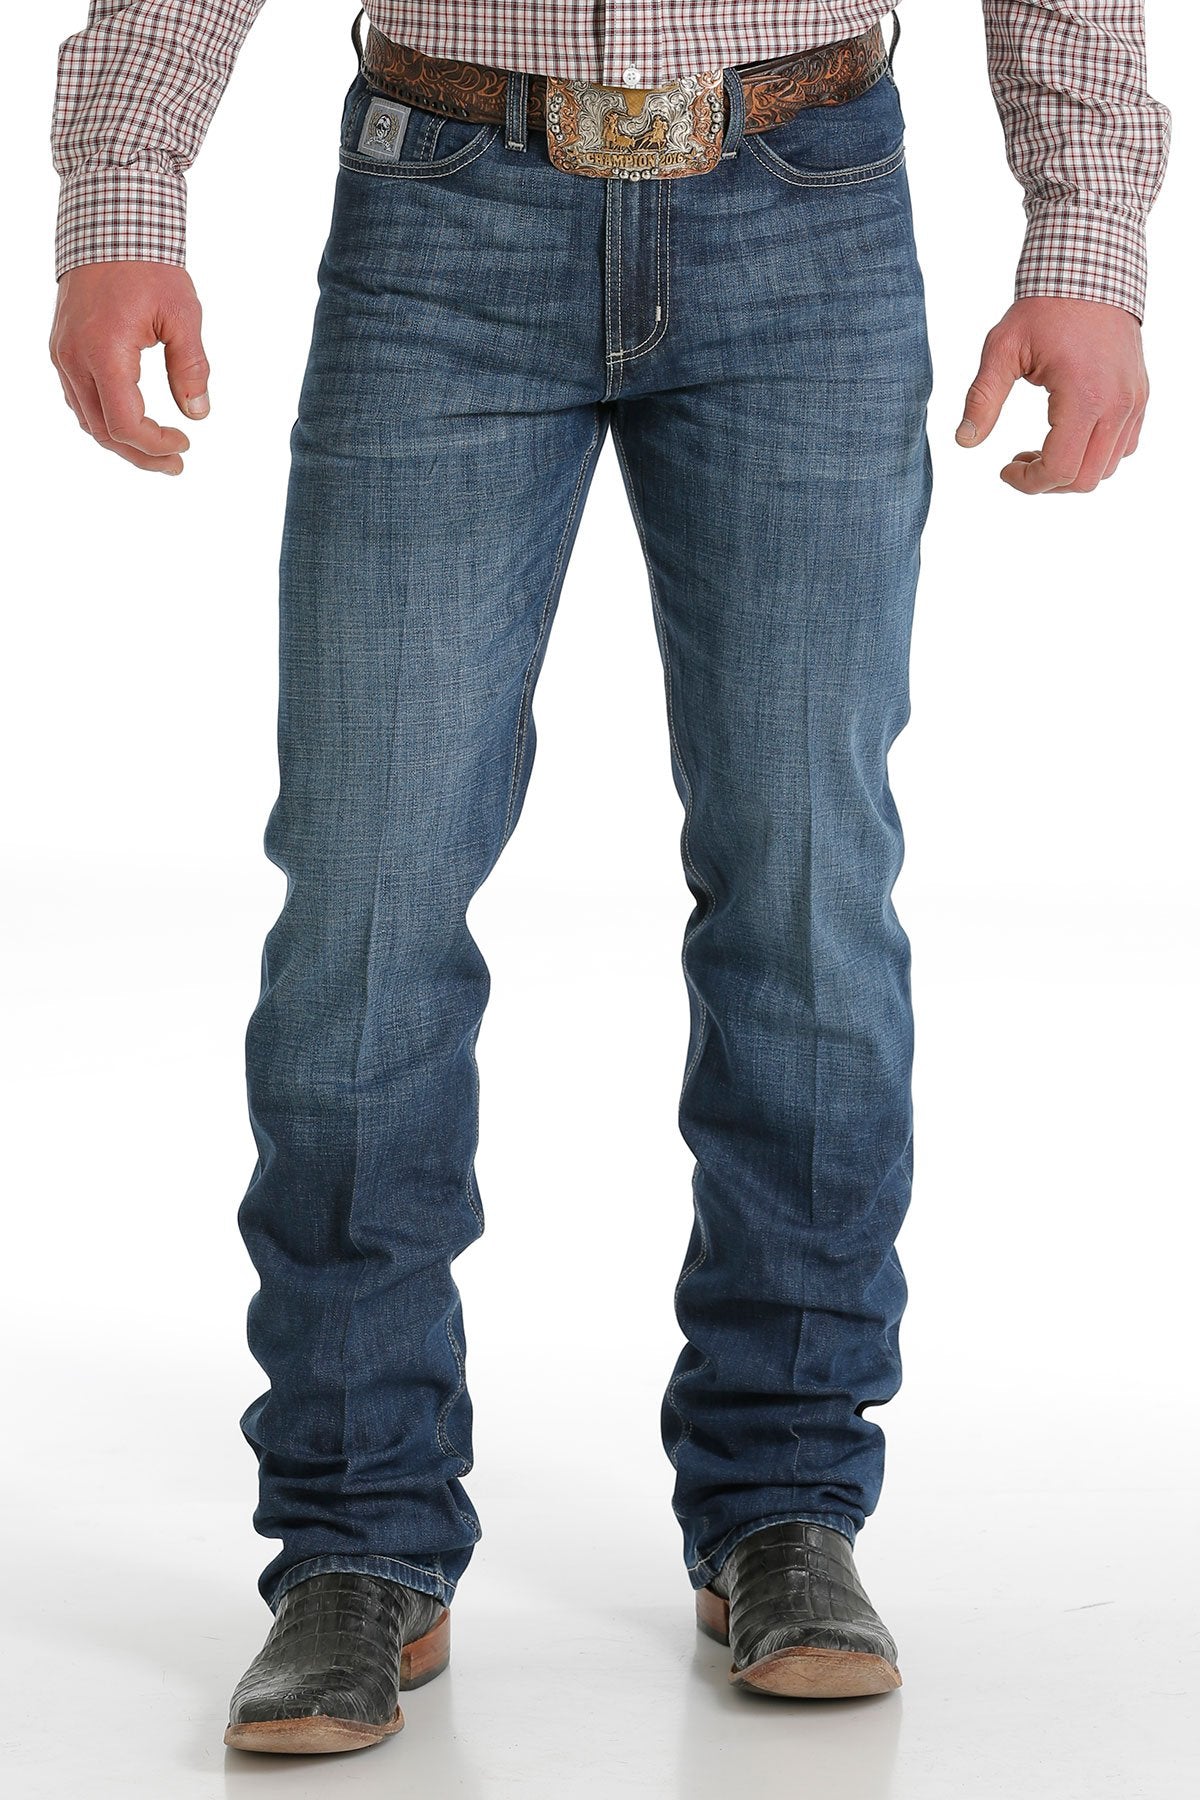 Cinch Men's Silver Label Dark Stone Wash Jeans